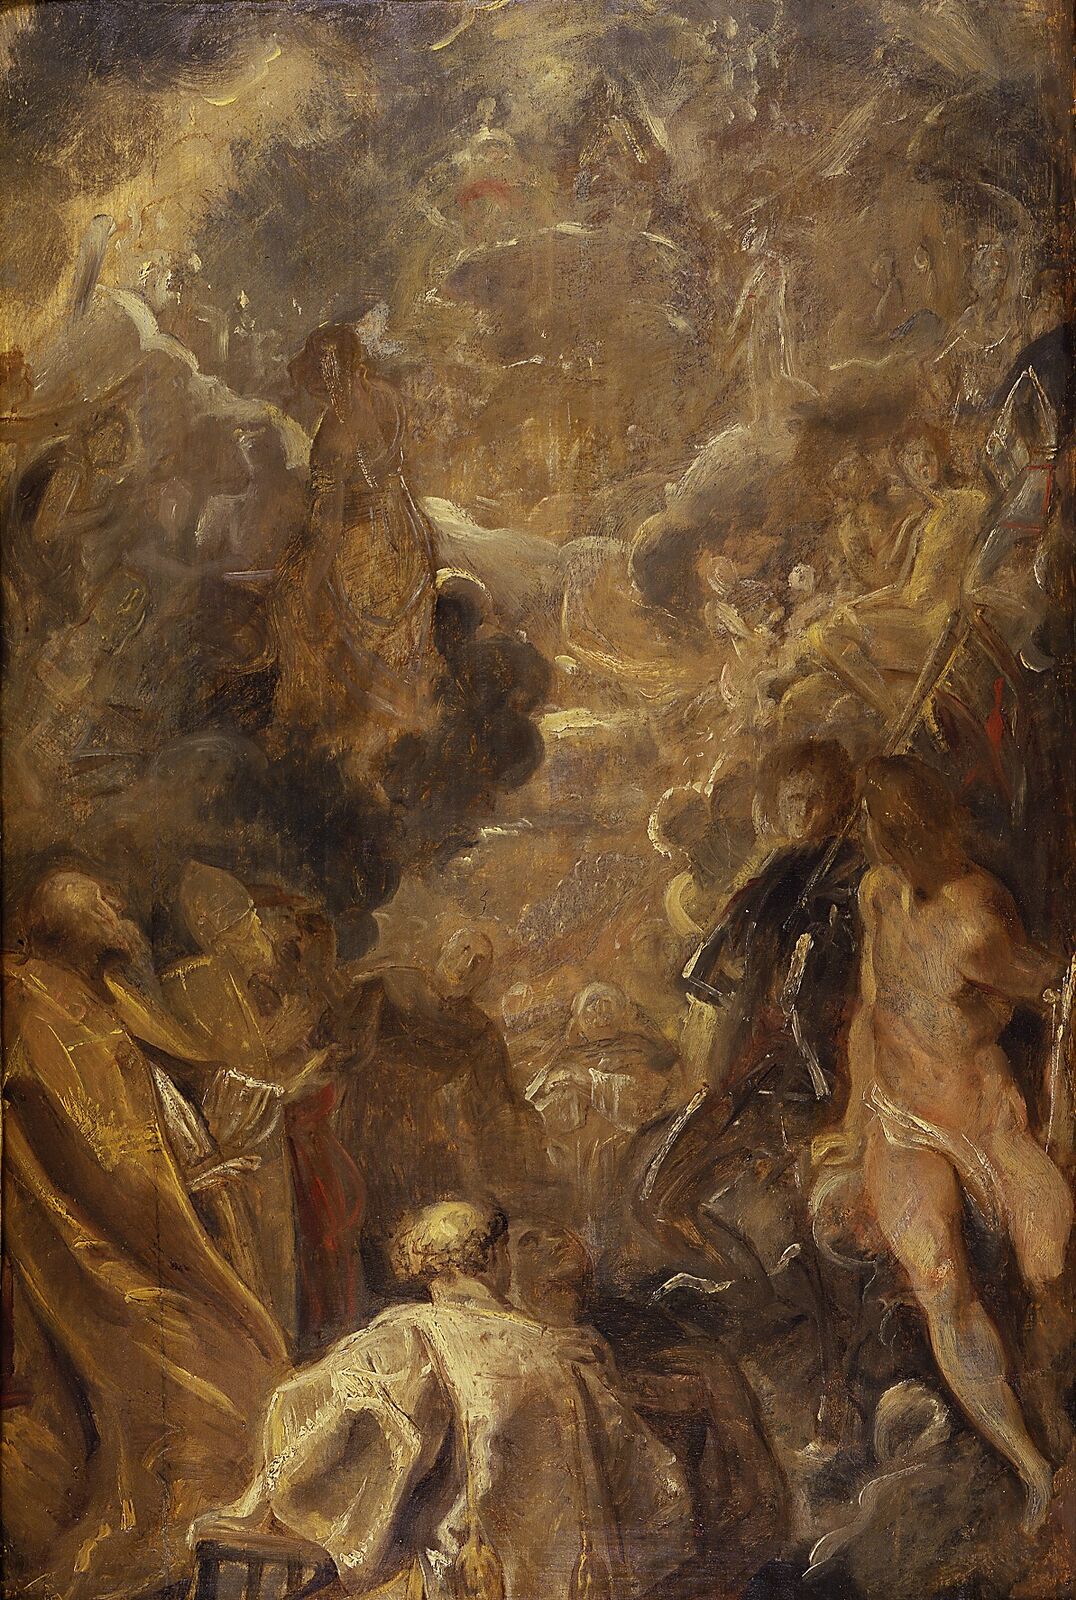 Peter+Paul+Rubens-1577-1640 (61).jpg